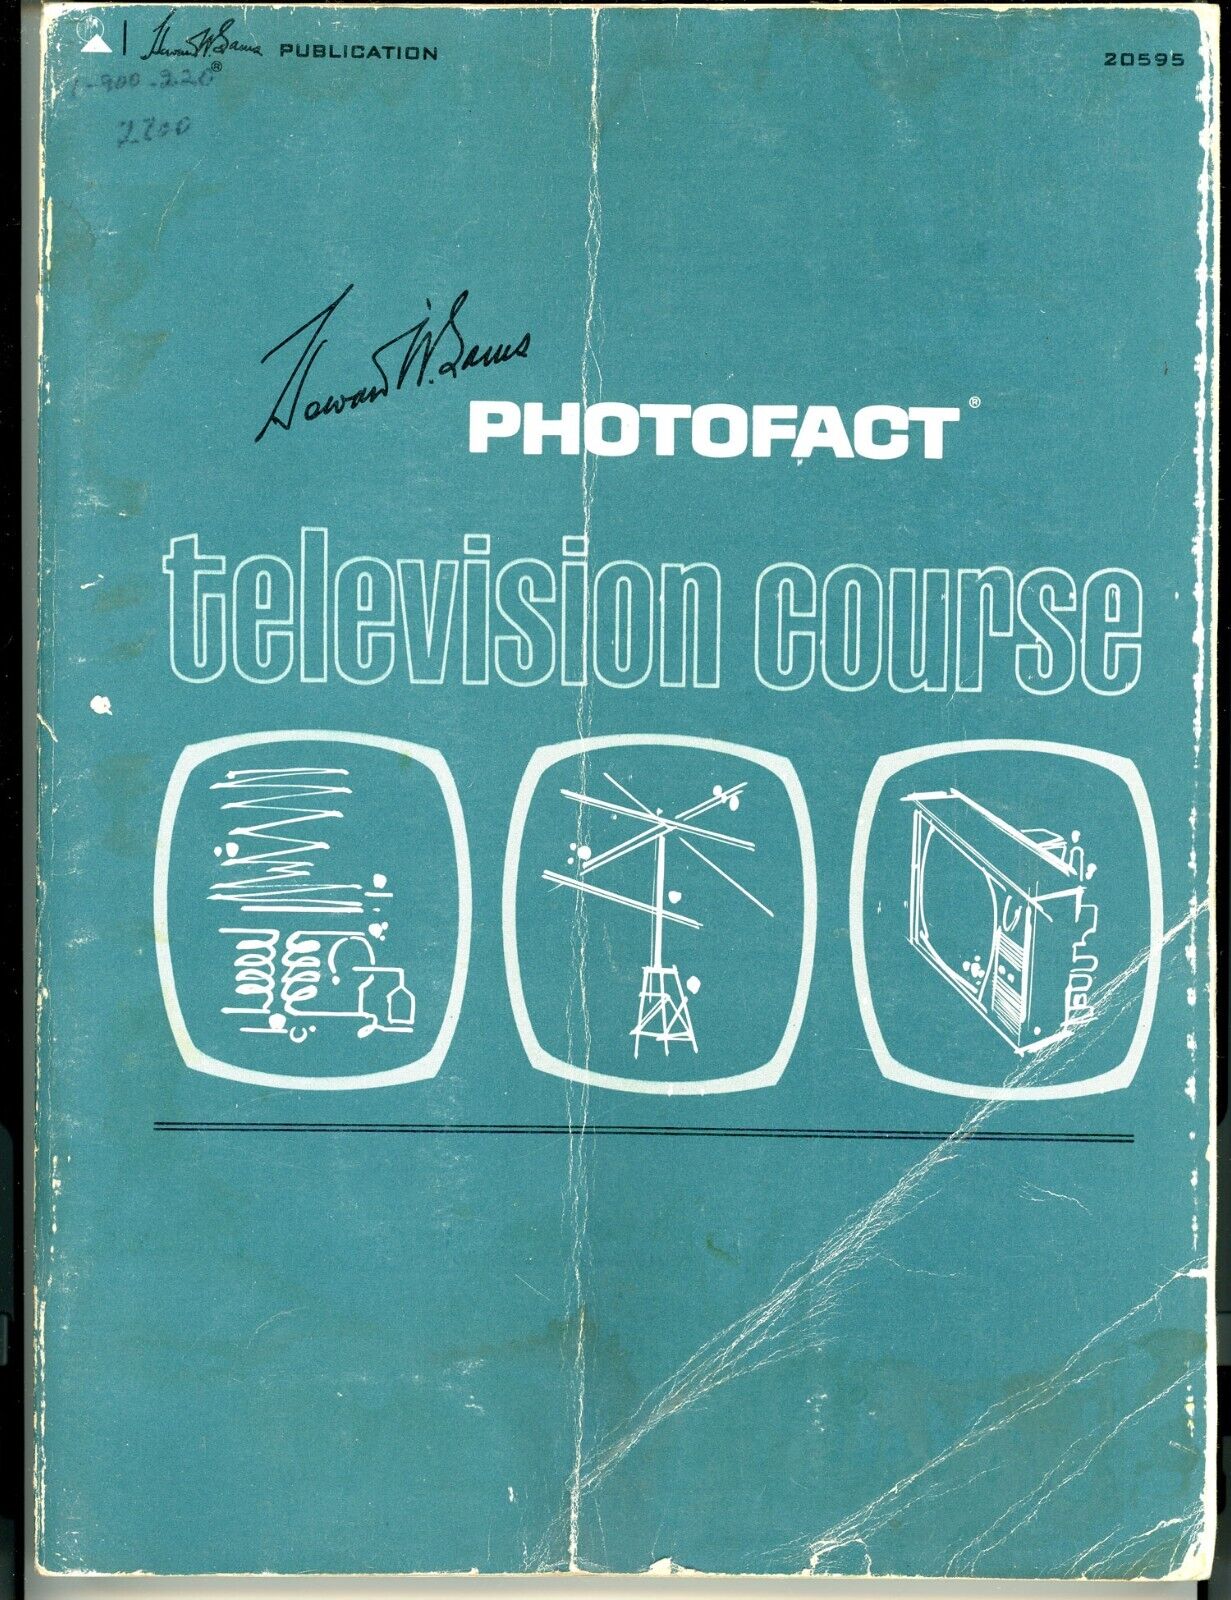 Howard W. Sams Photofact Television Course Book 1971